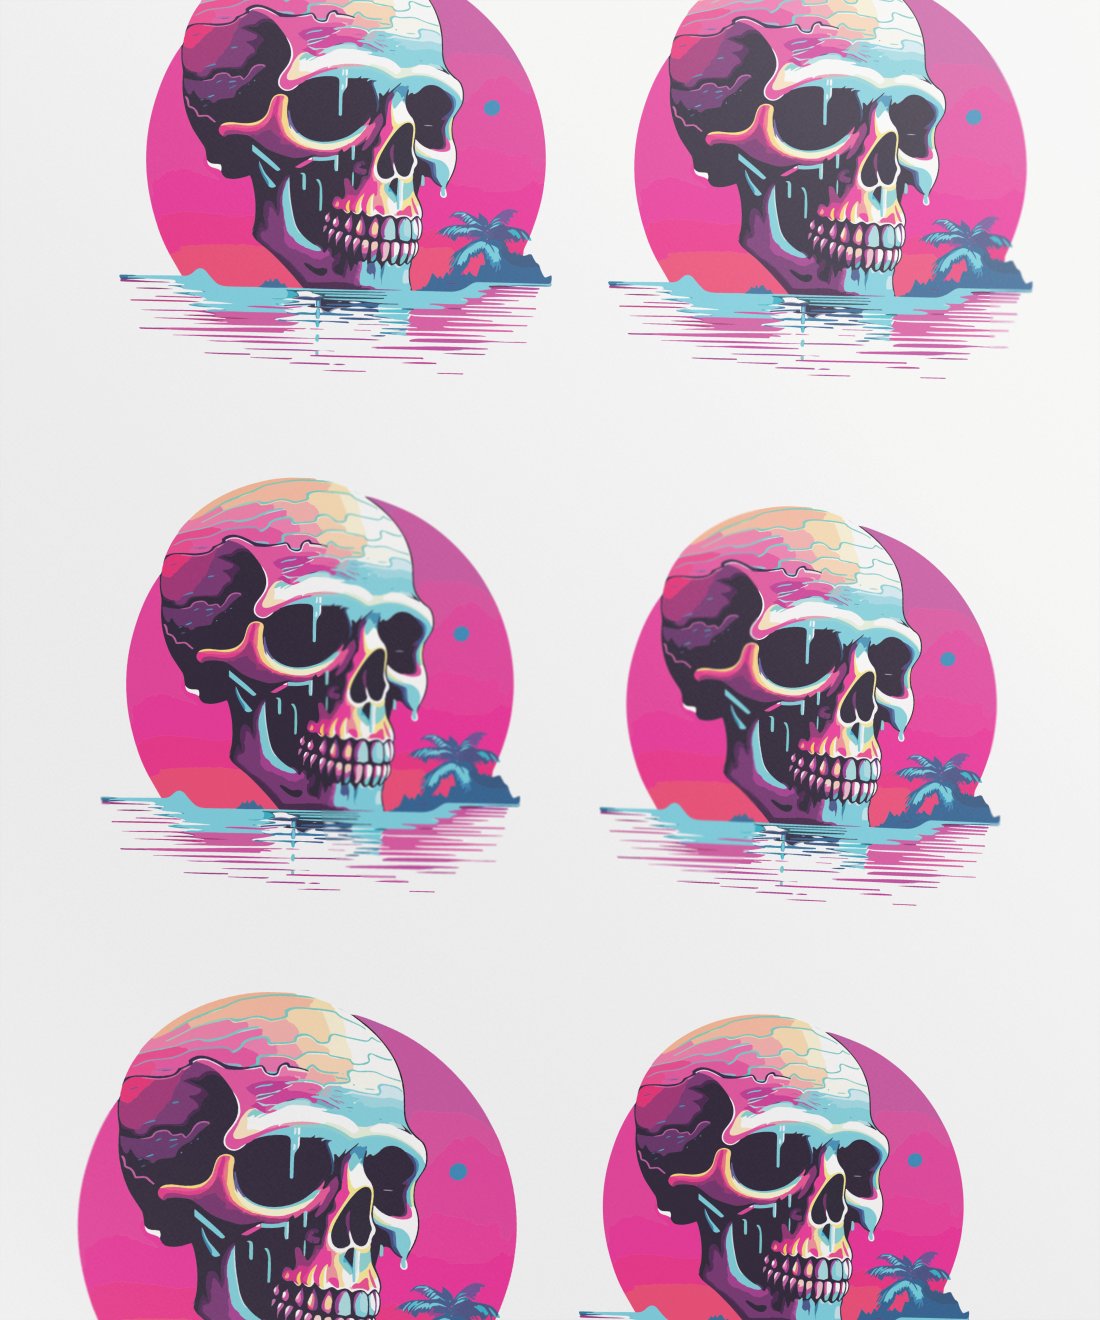 tropical-island-skull-art-colorful-cartoon-graphic-novel-illustration - Image 1